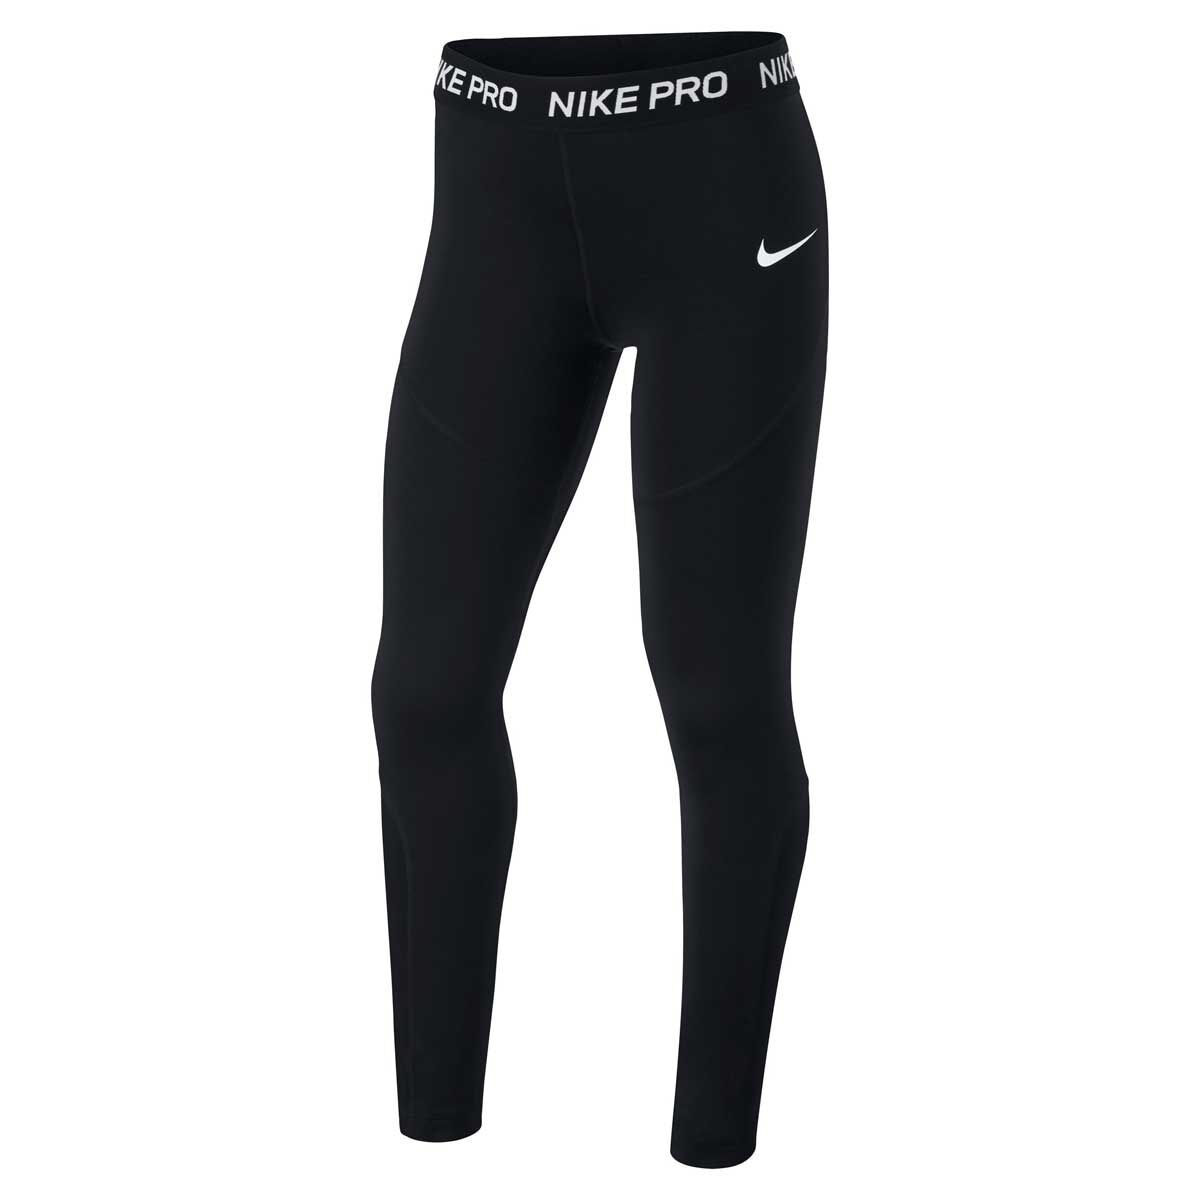 Nike Little Girls Athletic Leggings NWT Size 6 or 6X Black & White